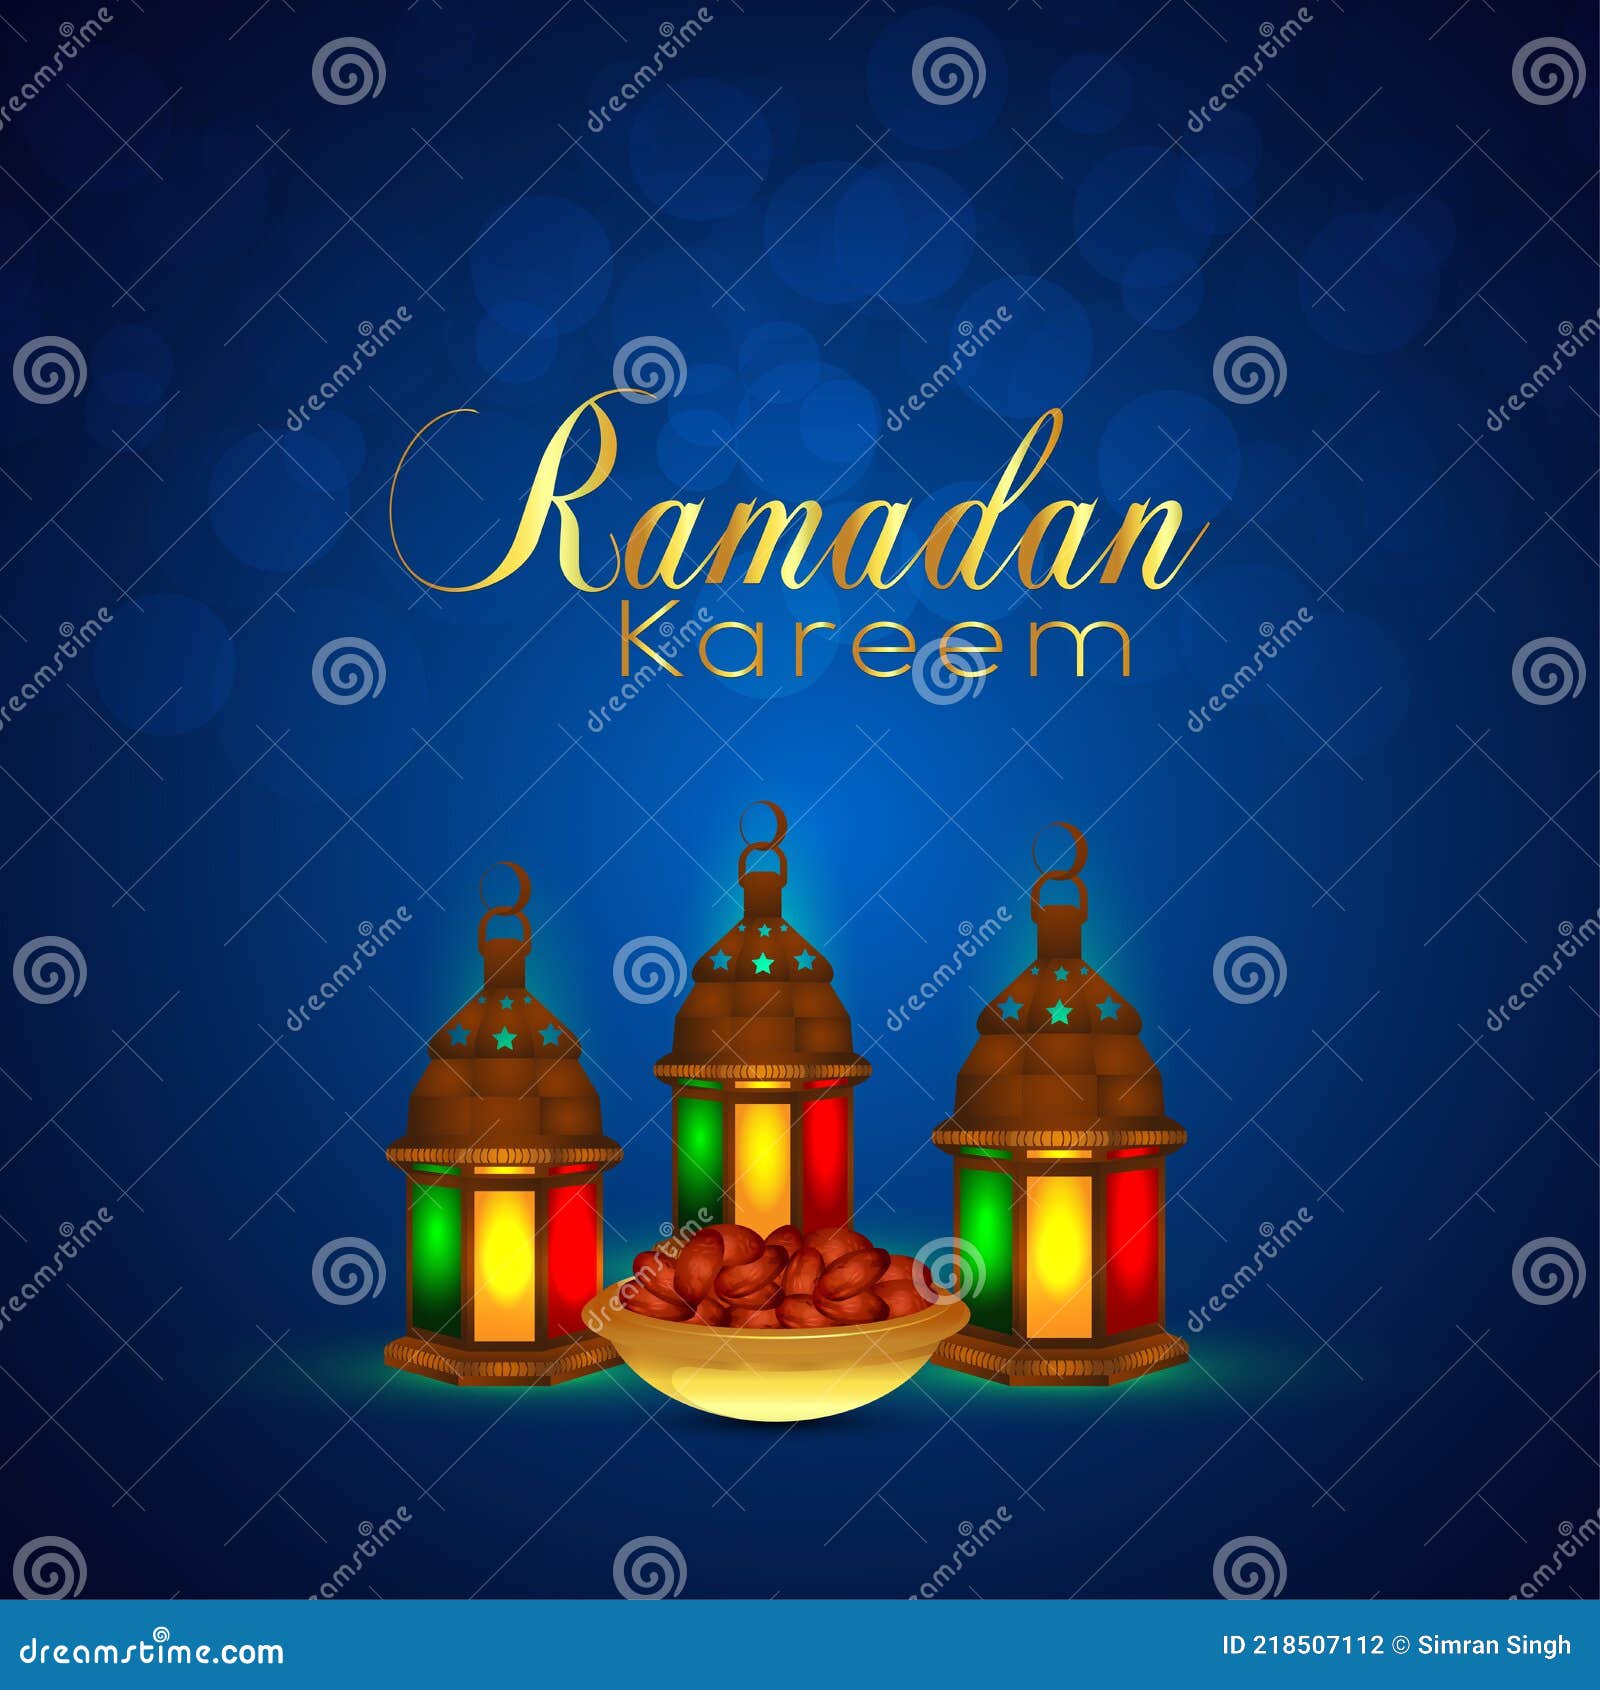 Ramadan Kareem Creative Islamic Festival with Holy Book Kuran and